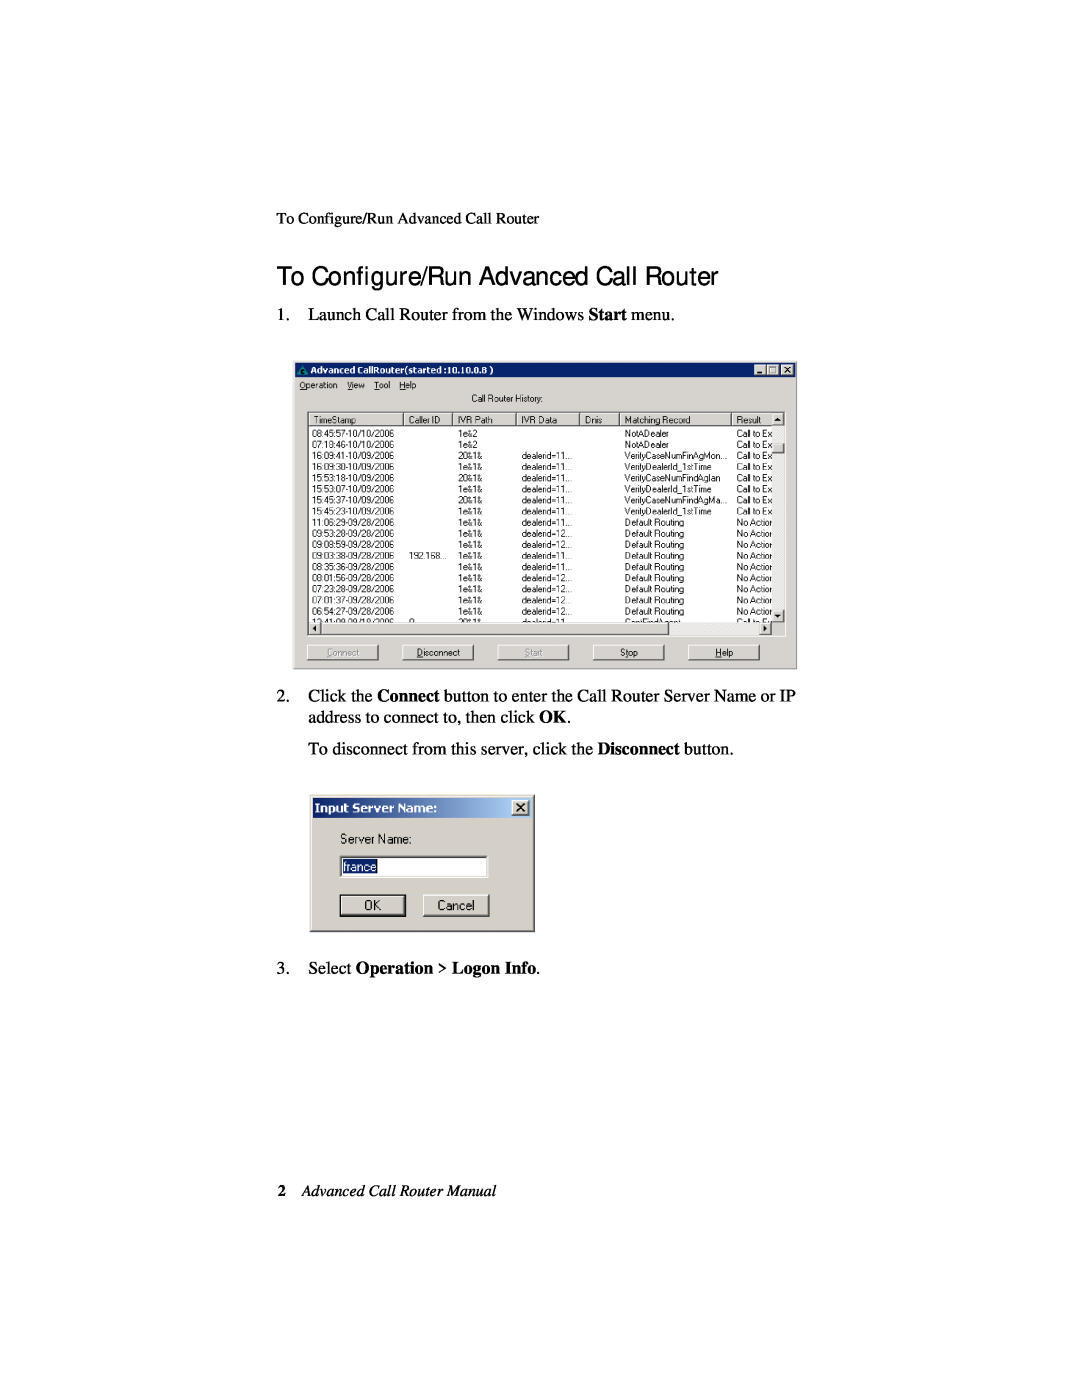 AltiGen comm 6/2008 4510-0001-6.0 manual To Configure/Run Advanced Call Router, Select Operation Logon Info 